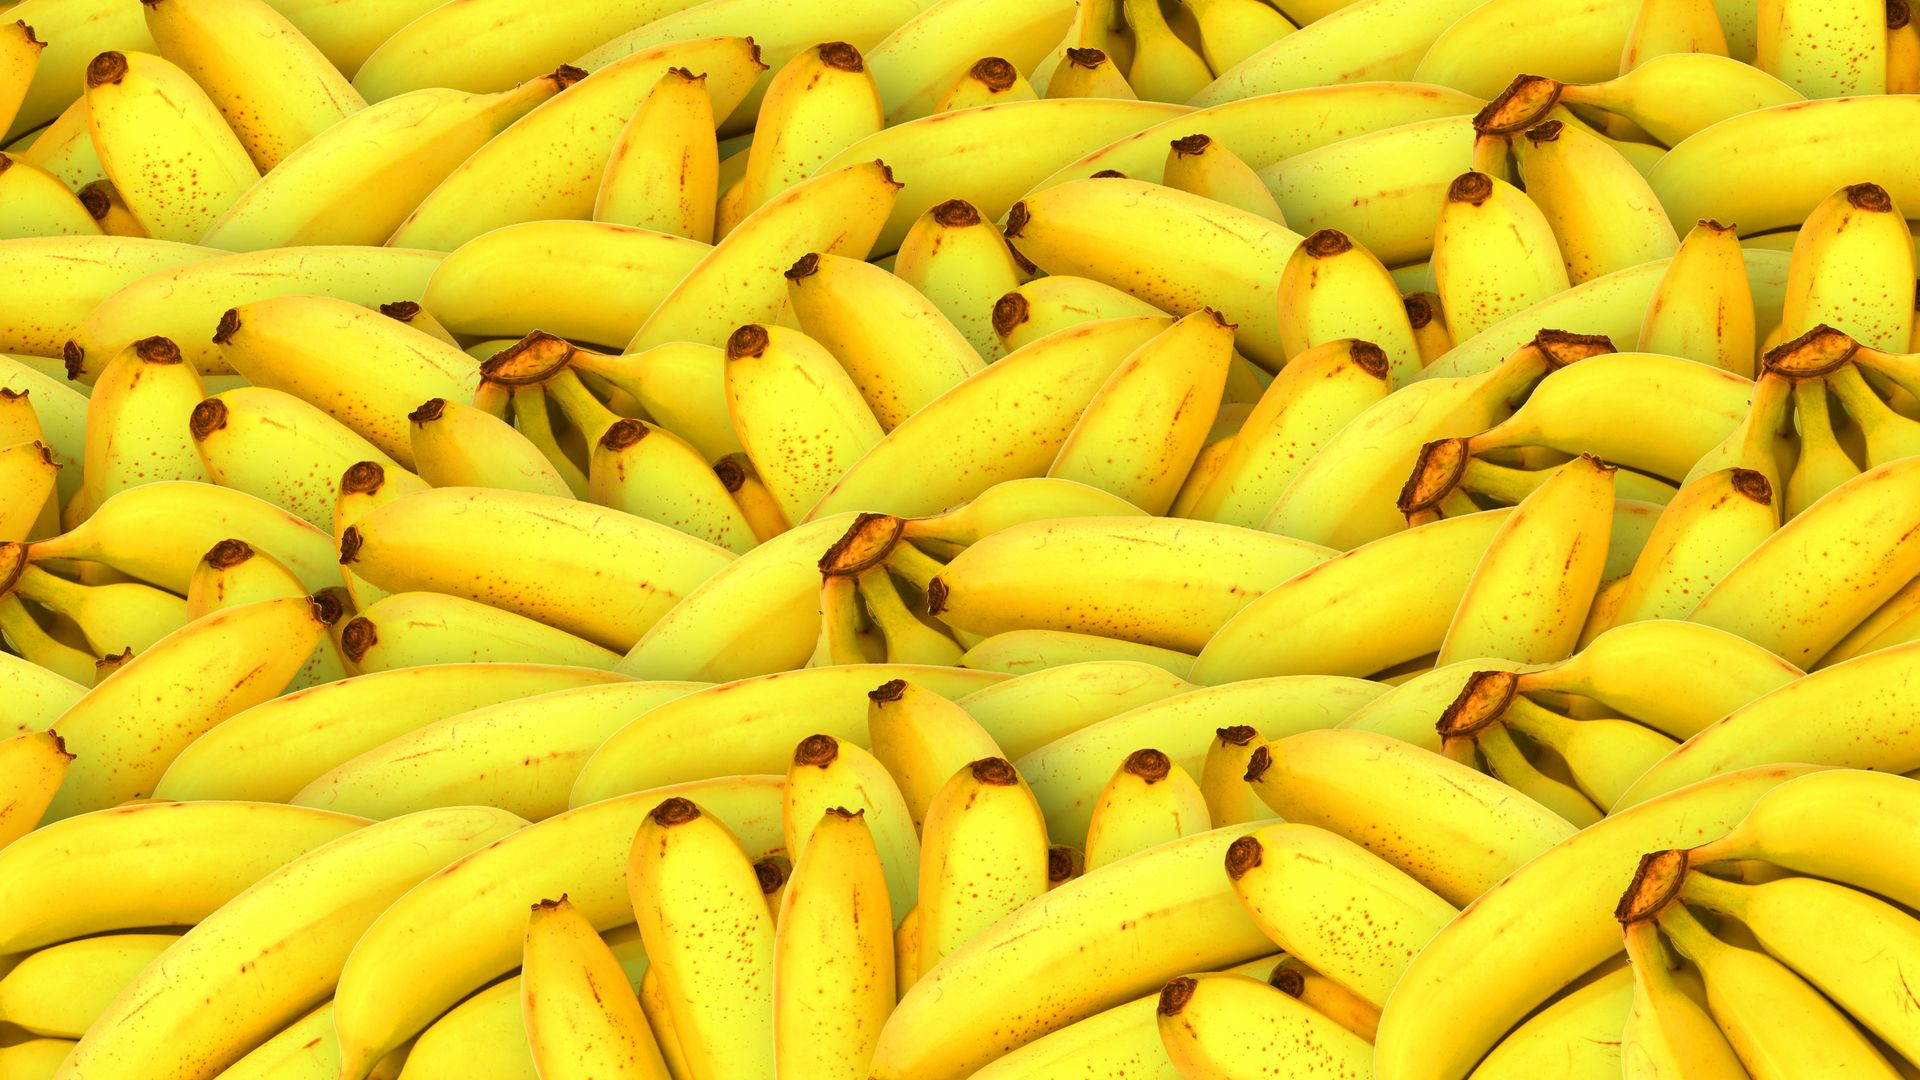 Bananas Free Wallpapers For Desktop Windows Mac And Mobile